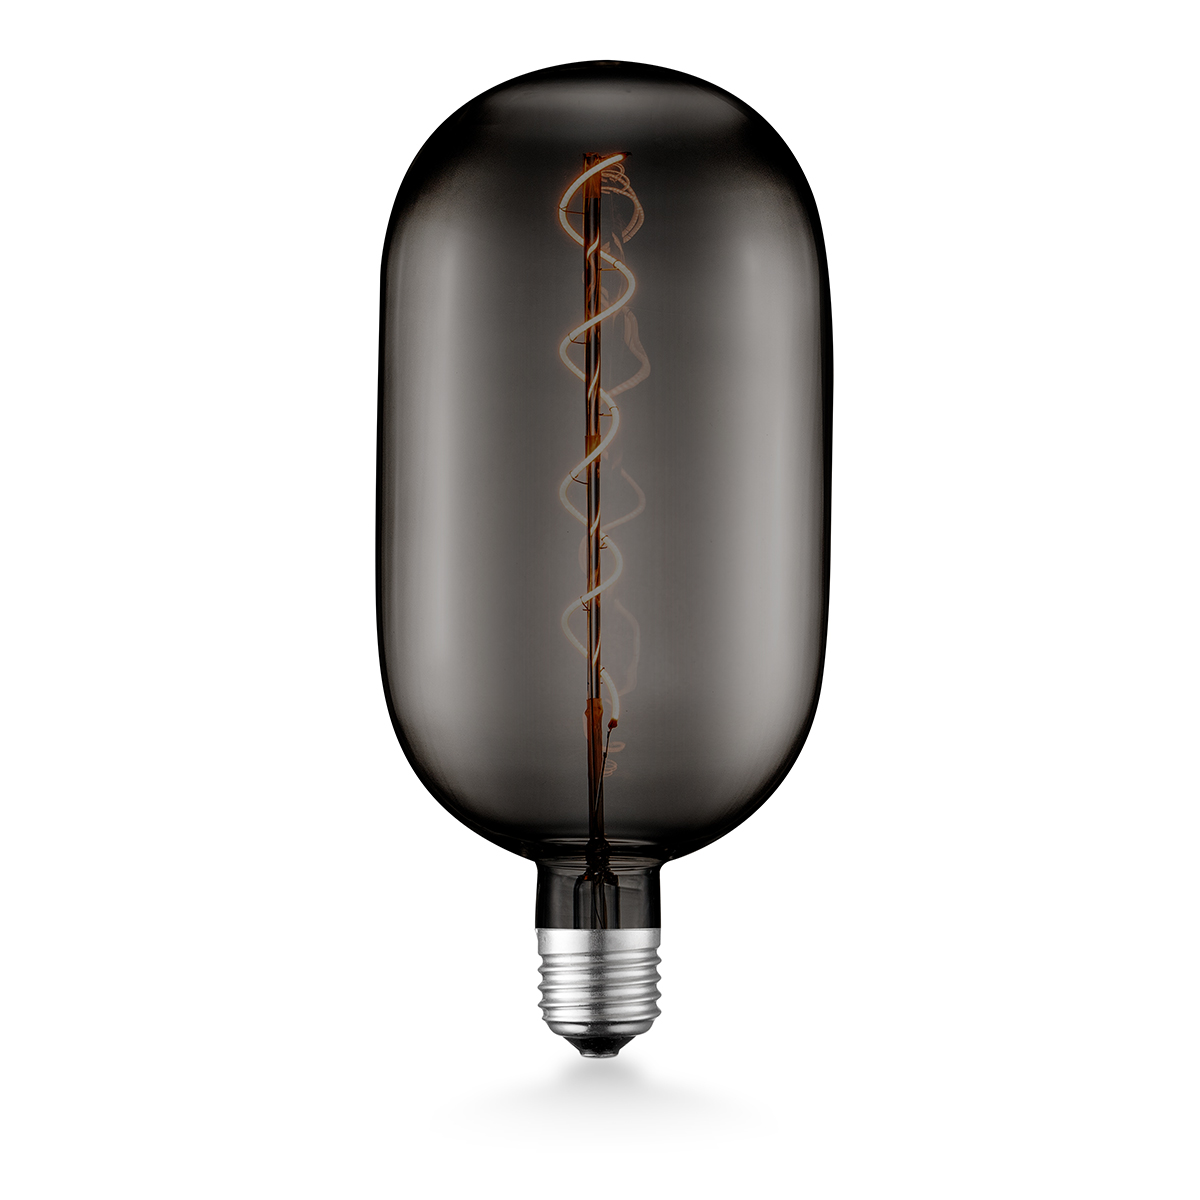 Tangla lighting - TLB-8031-04TM - LED Light Bulb Single Spiral filament - special 4W titanium - sleek - dimmable - E27